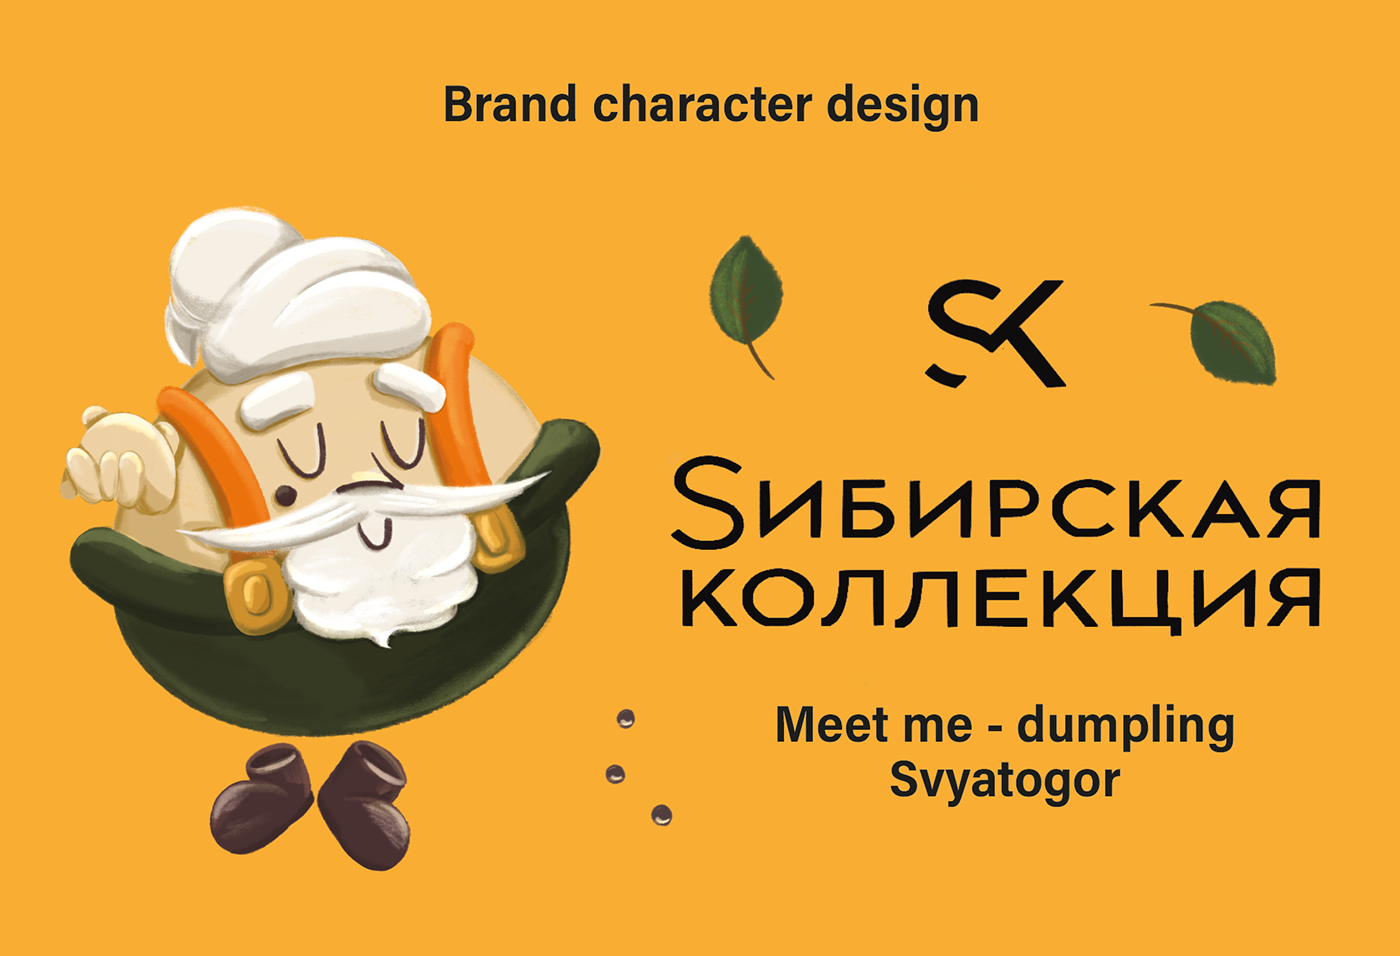 Concept brand character design for the Sybirskaya collection TM
Dumpling Svyatogor